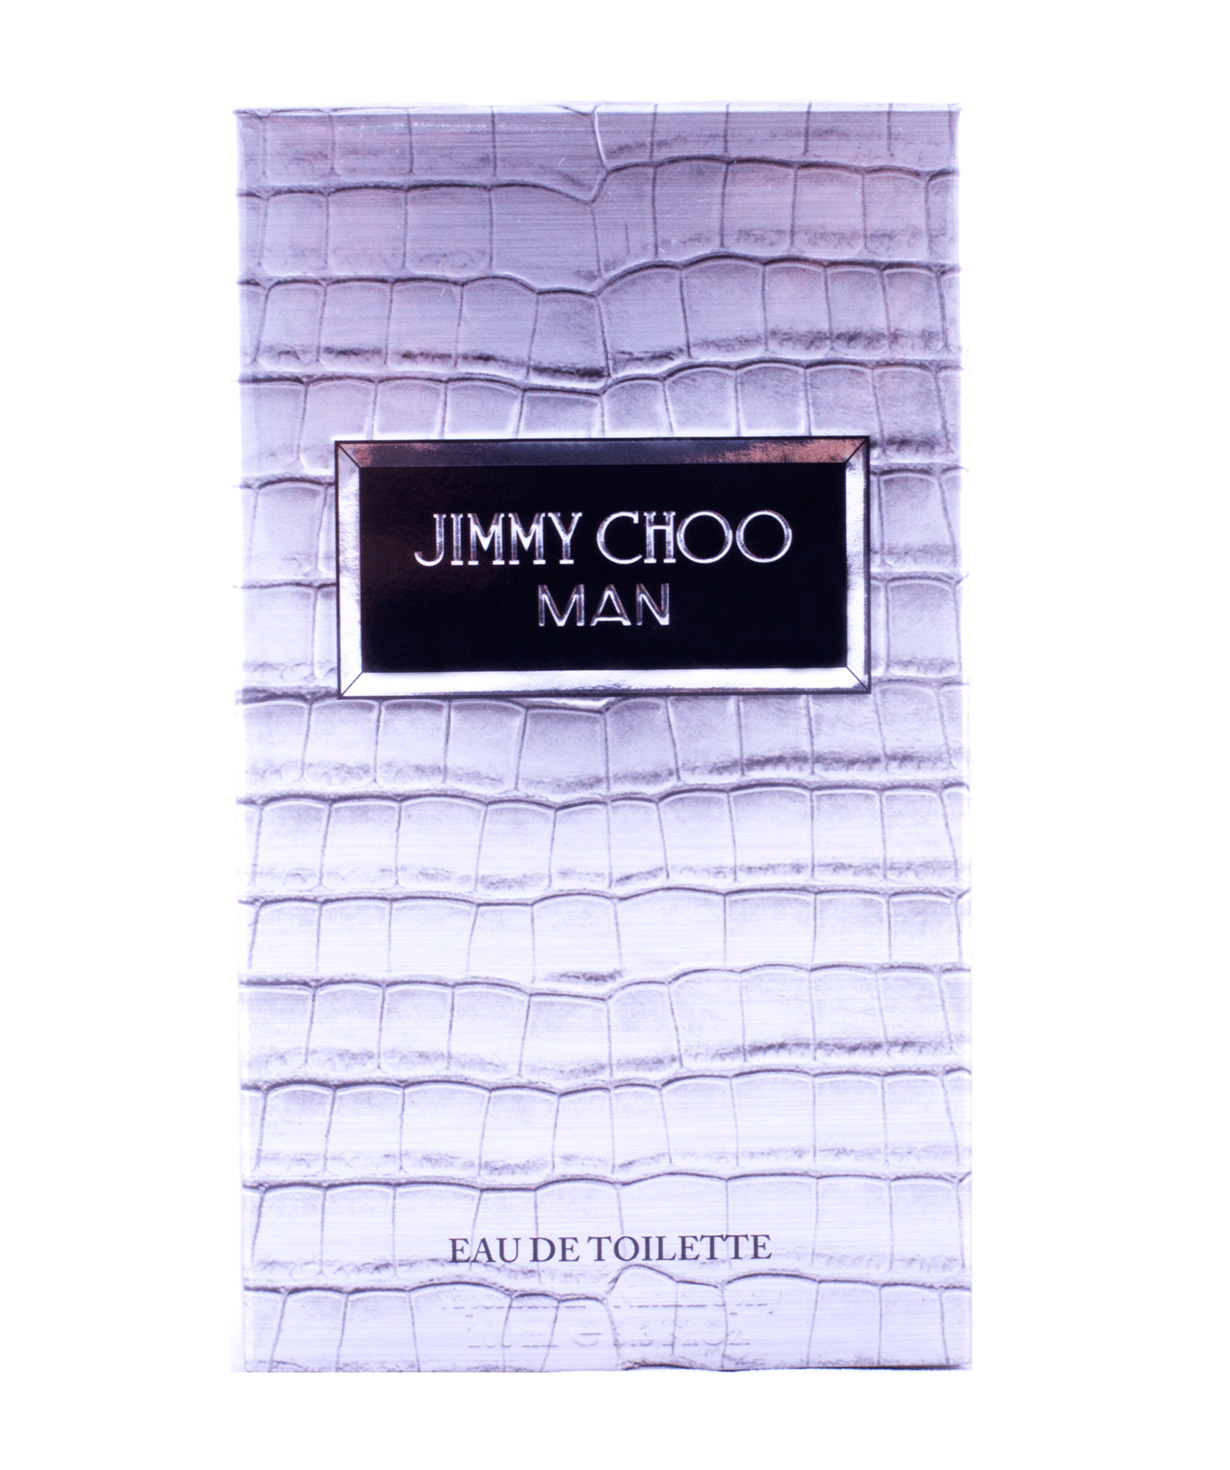 Perfume «Jimmy Choo» for men, 100 ml